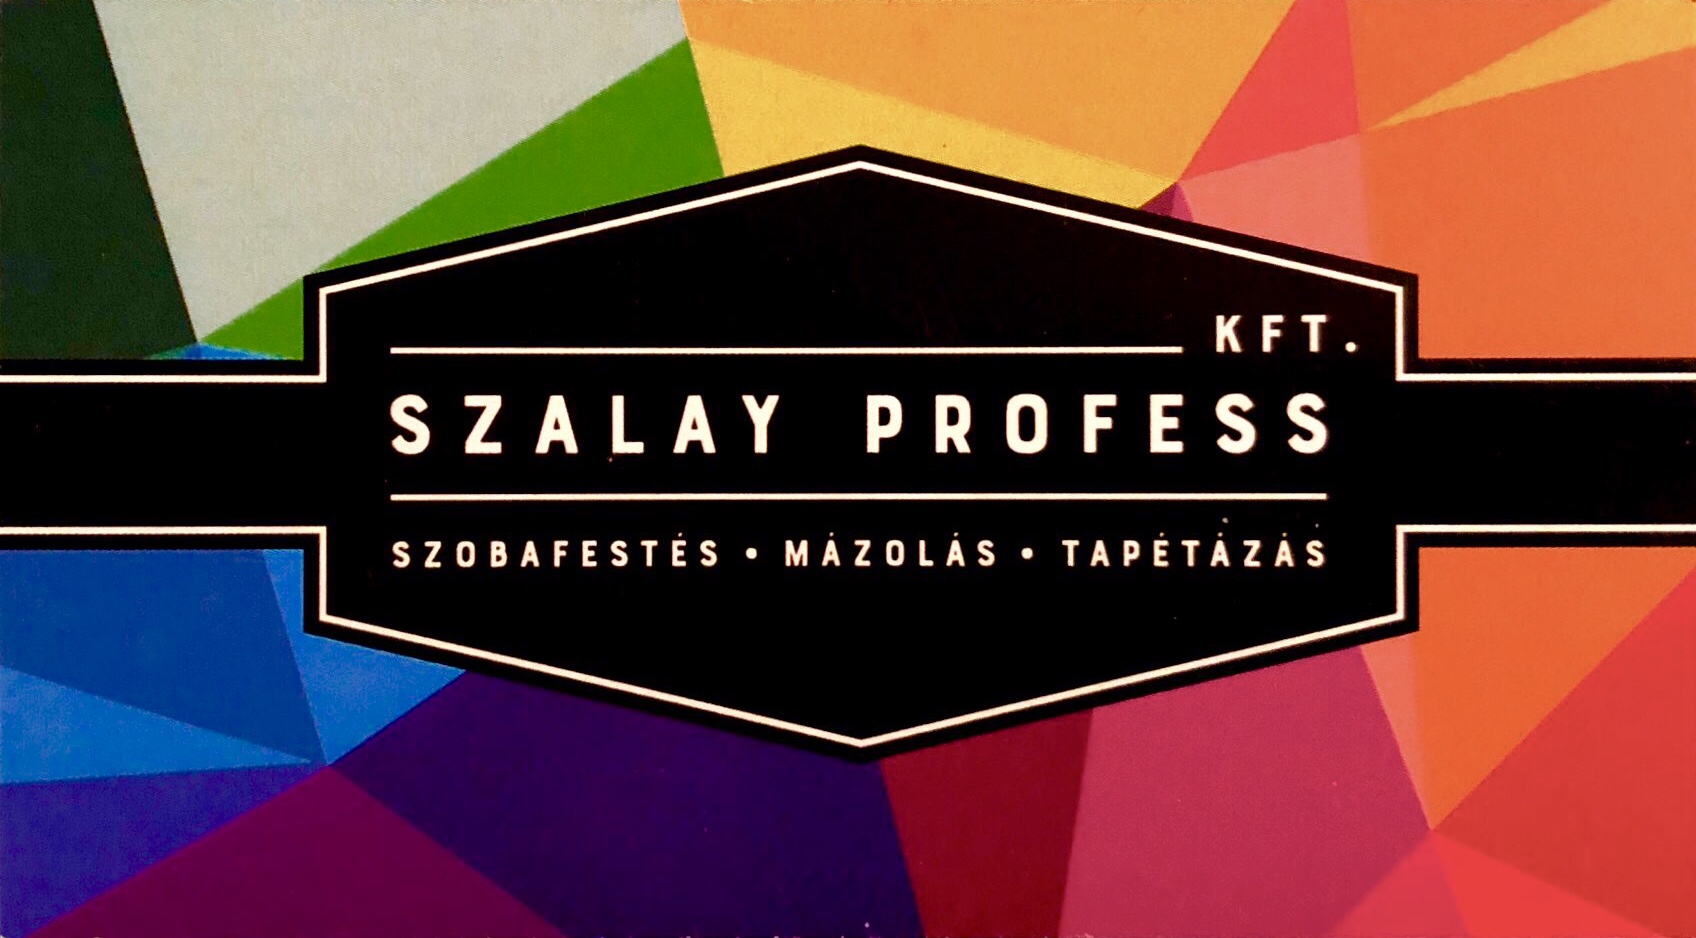 SZALAY PROFESS KFT